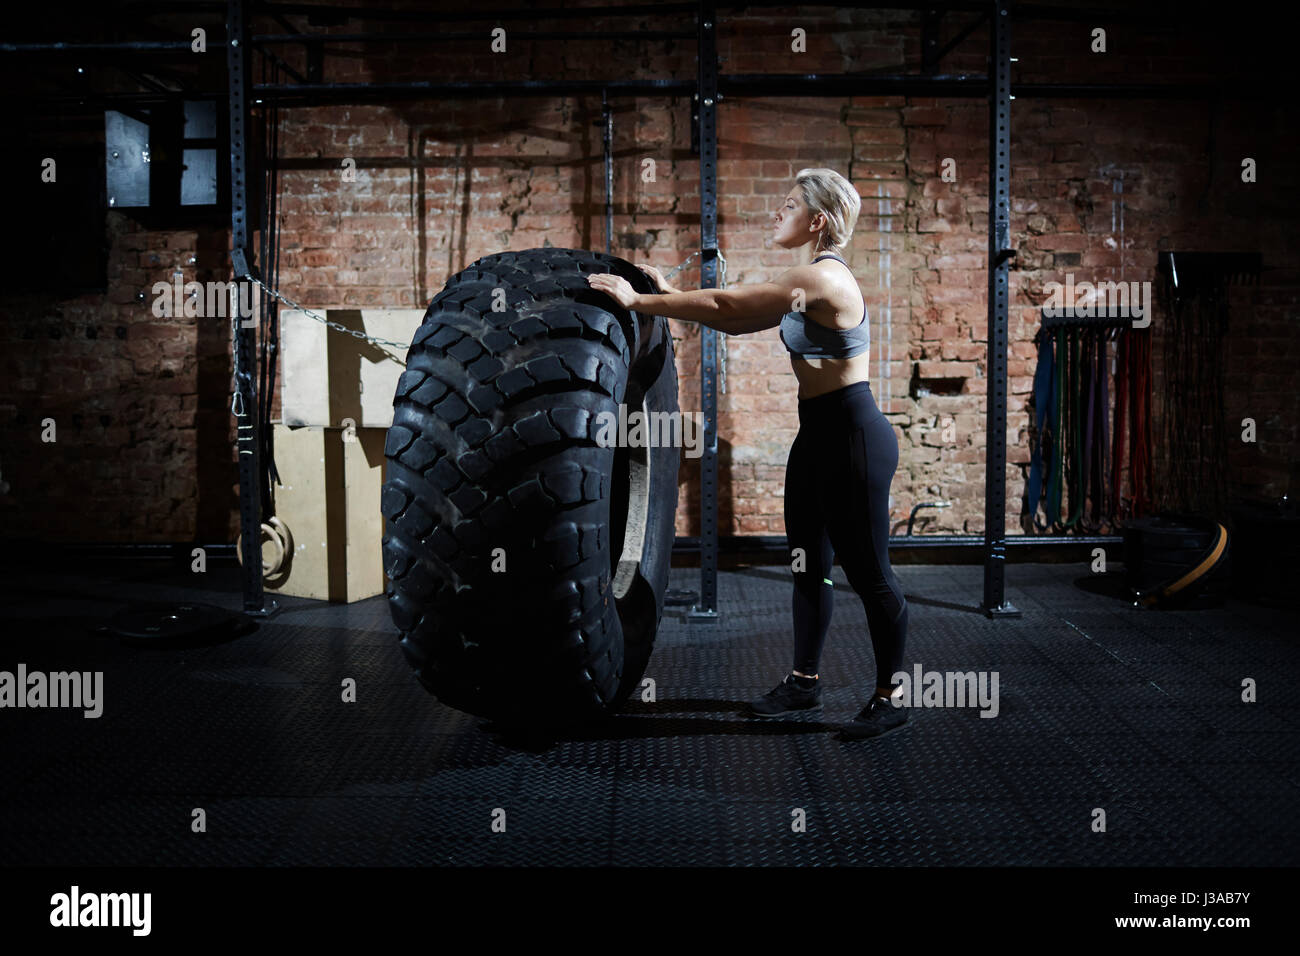 Spiegeln Reifen im Fitness-Studio Stockfoto